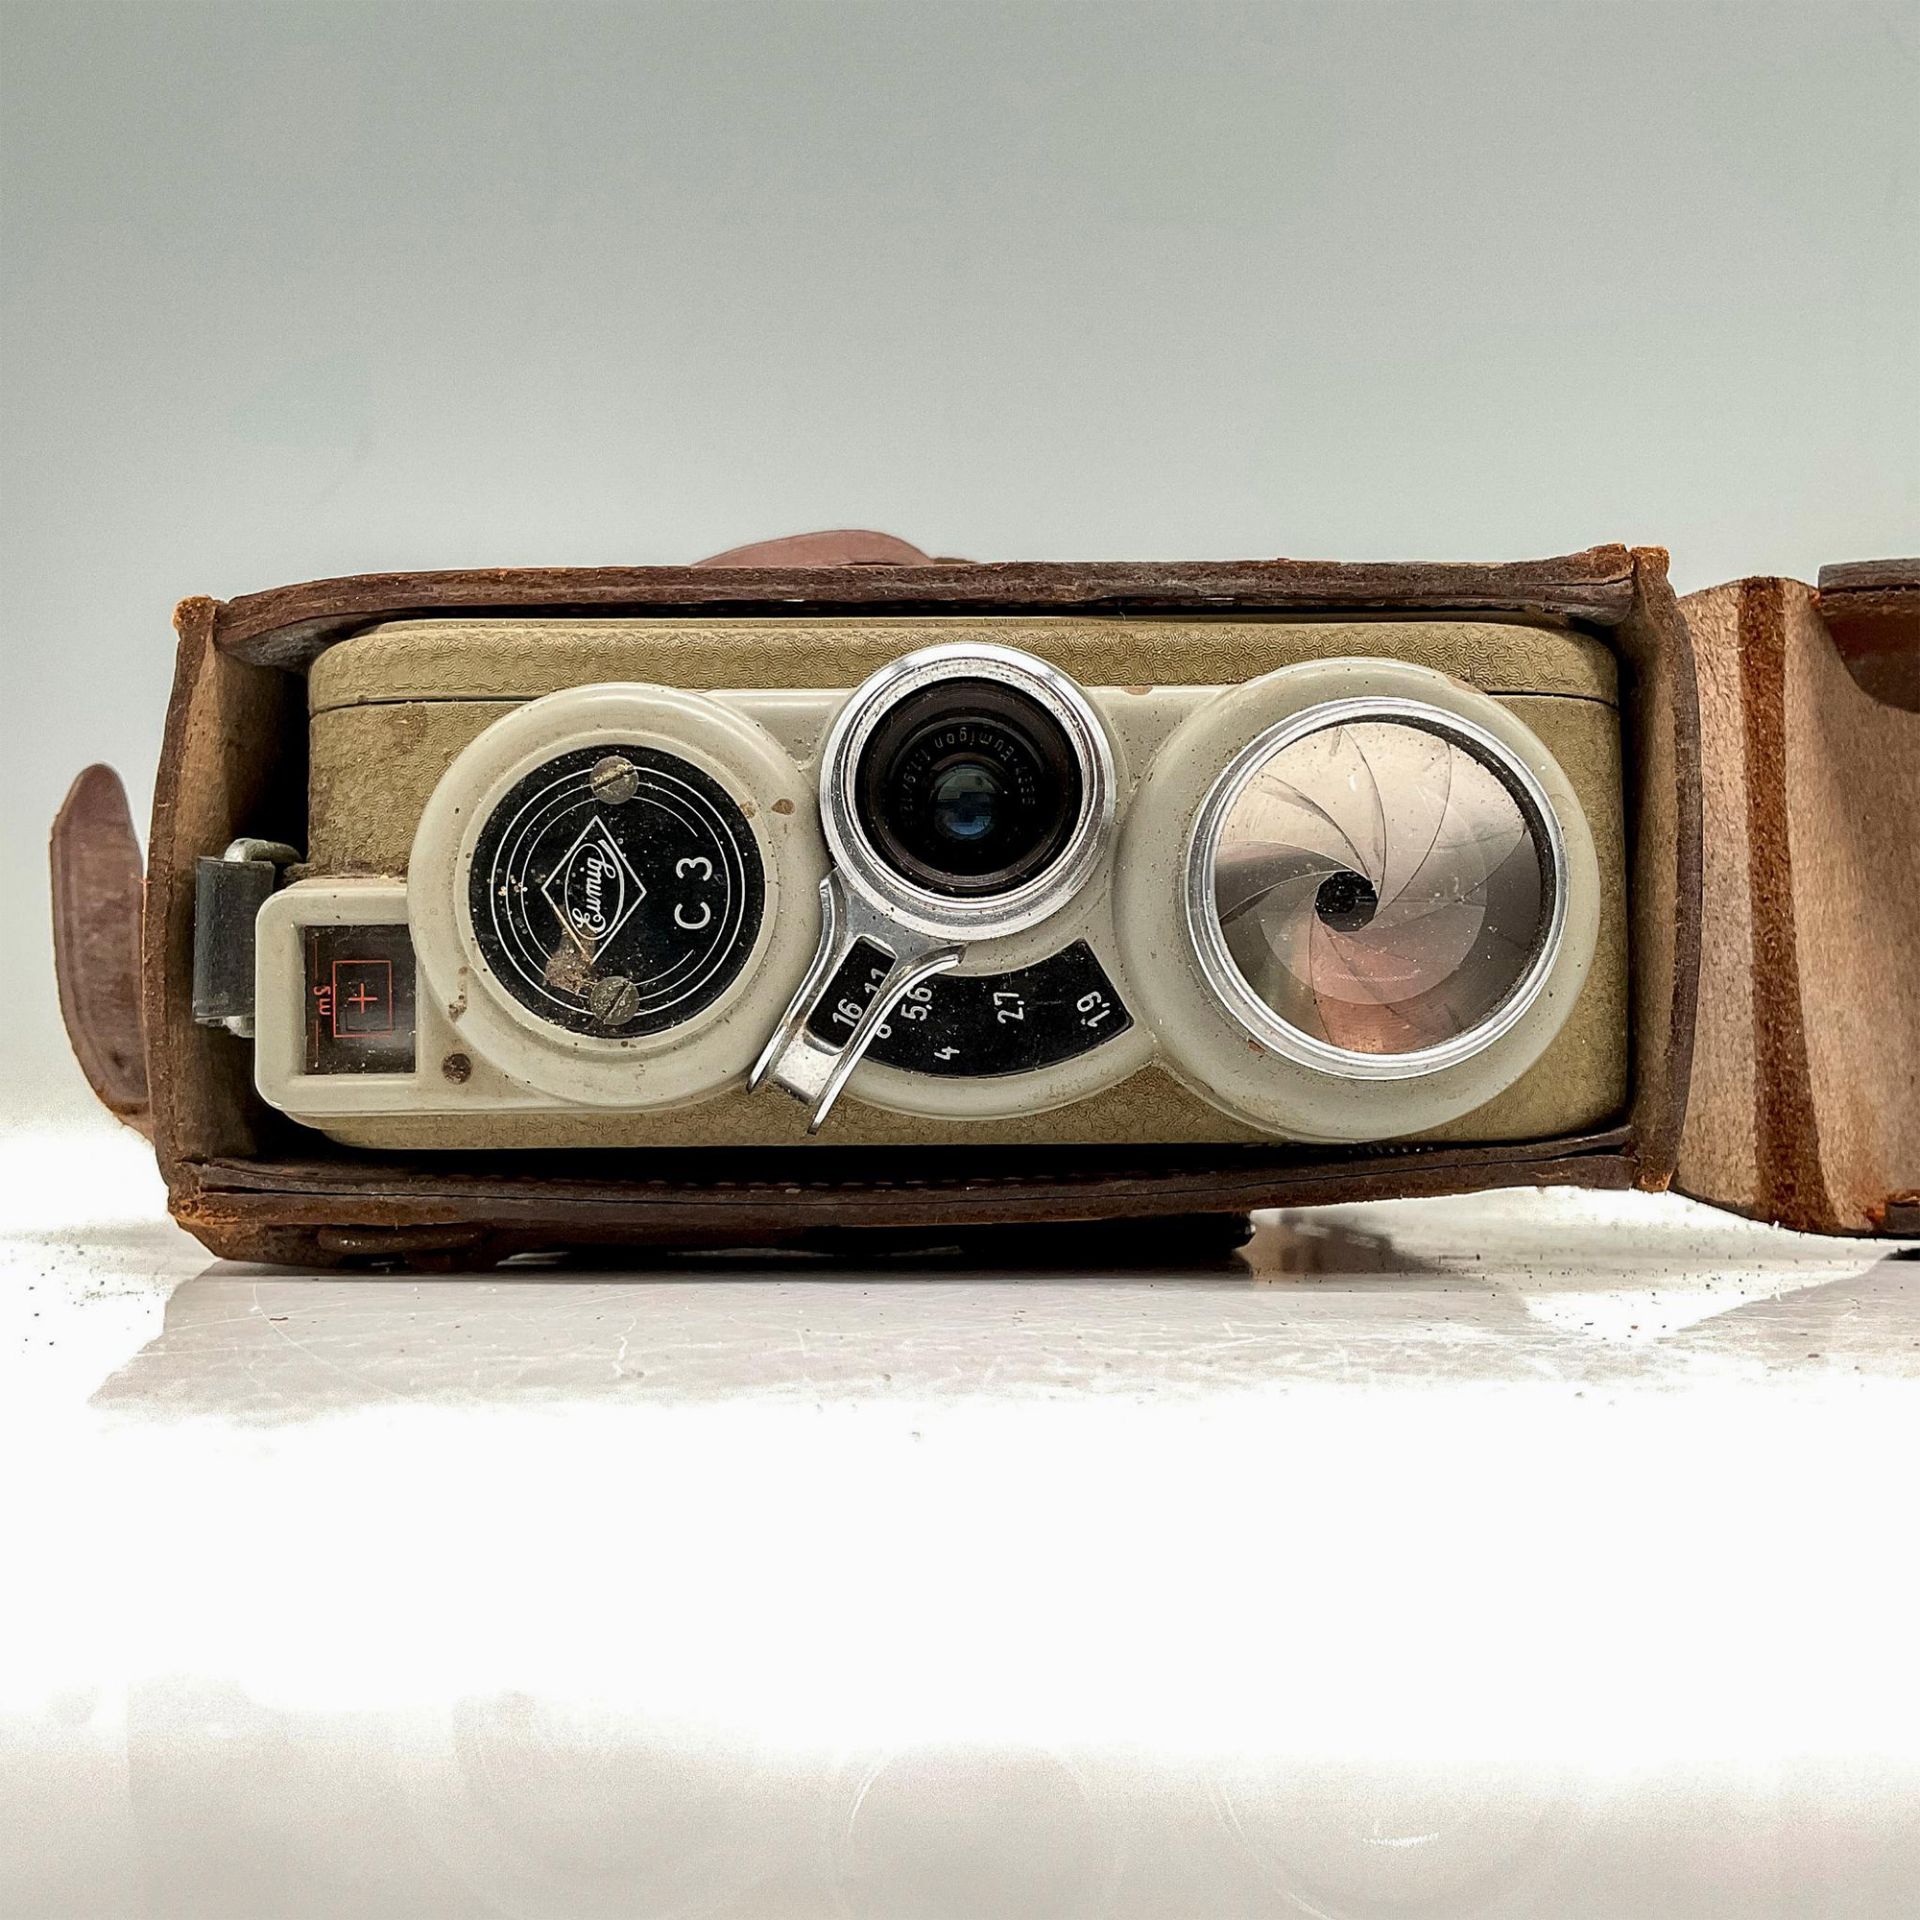 Eumig C3 8mm Cine Camera with Original Leather Case - Image 5 of 9